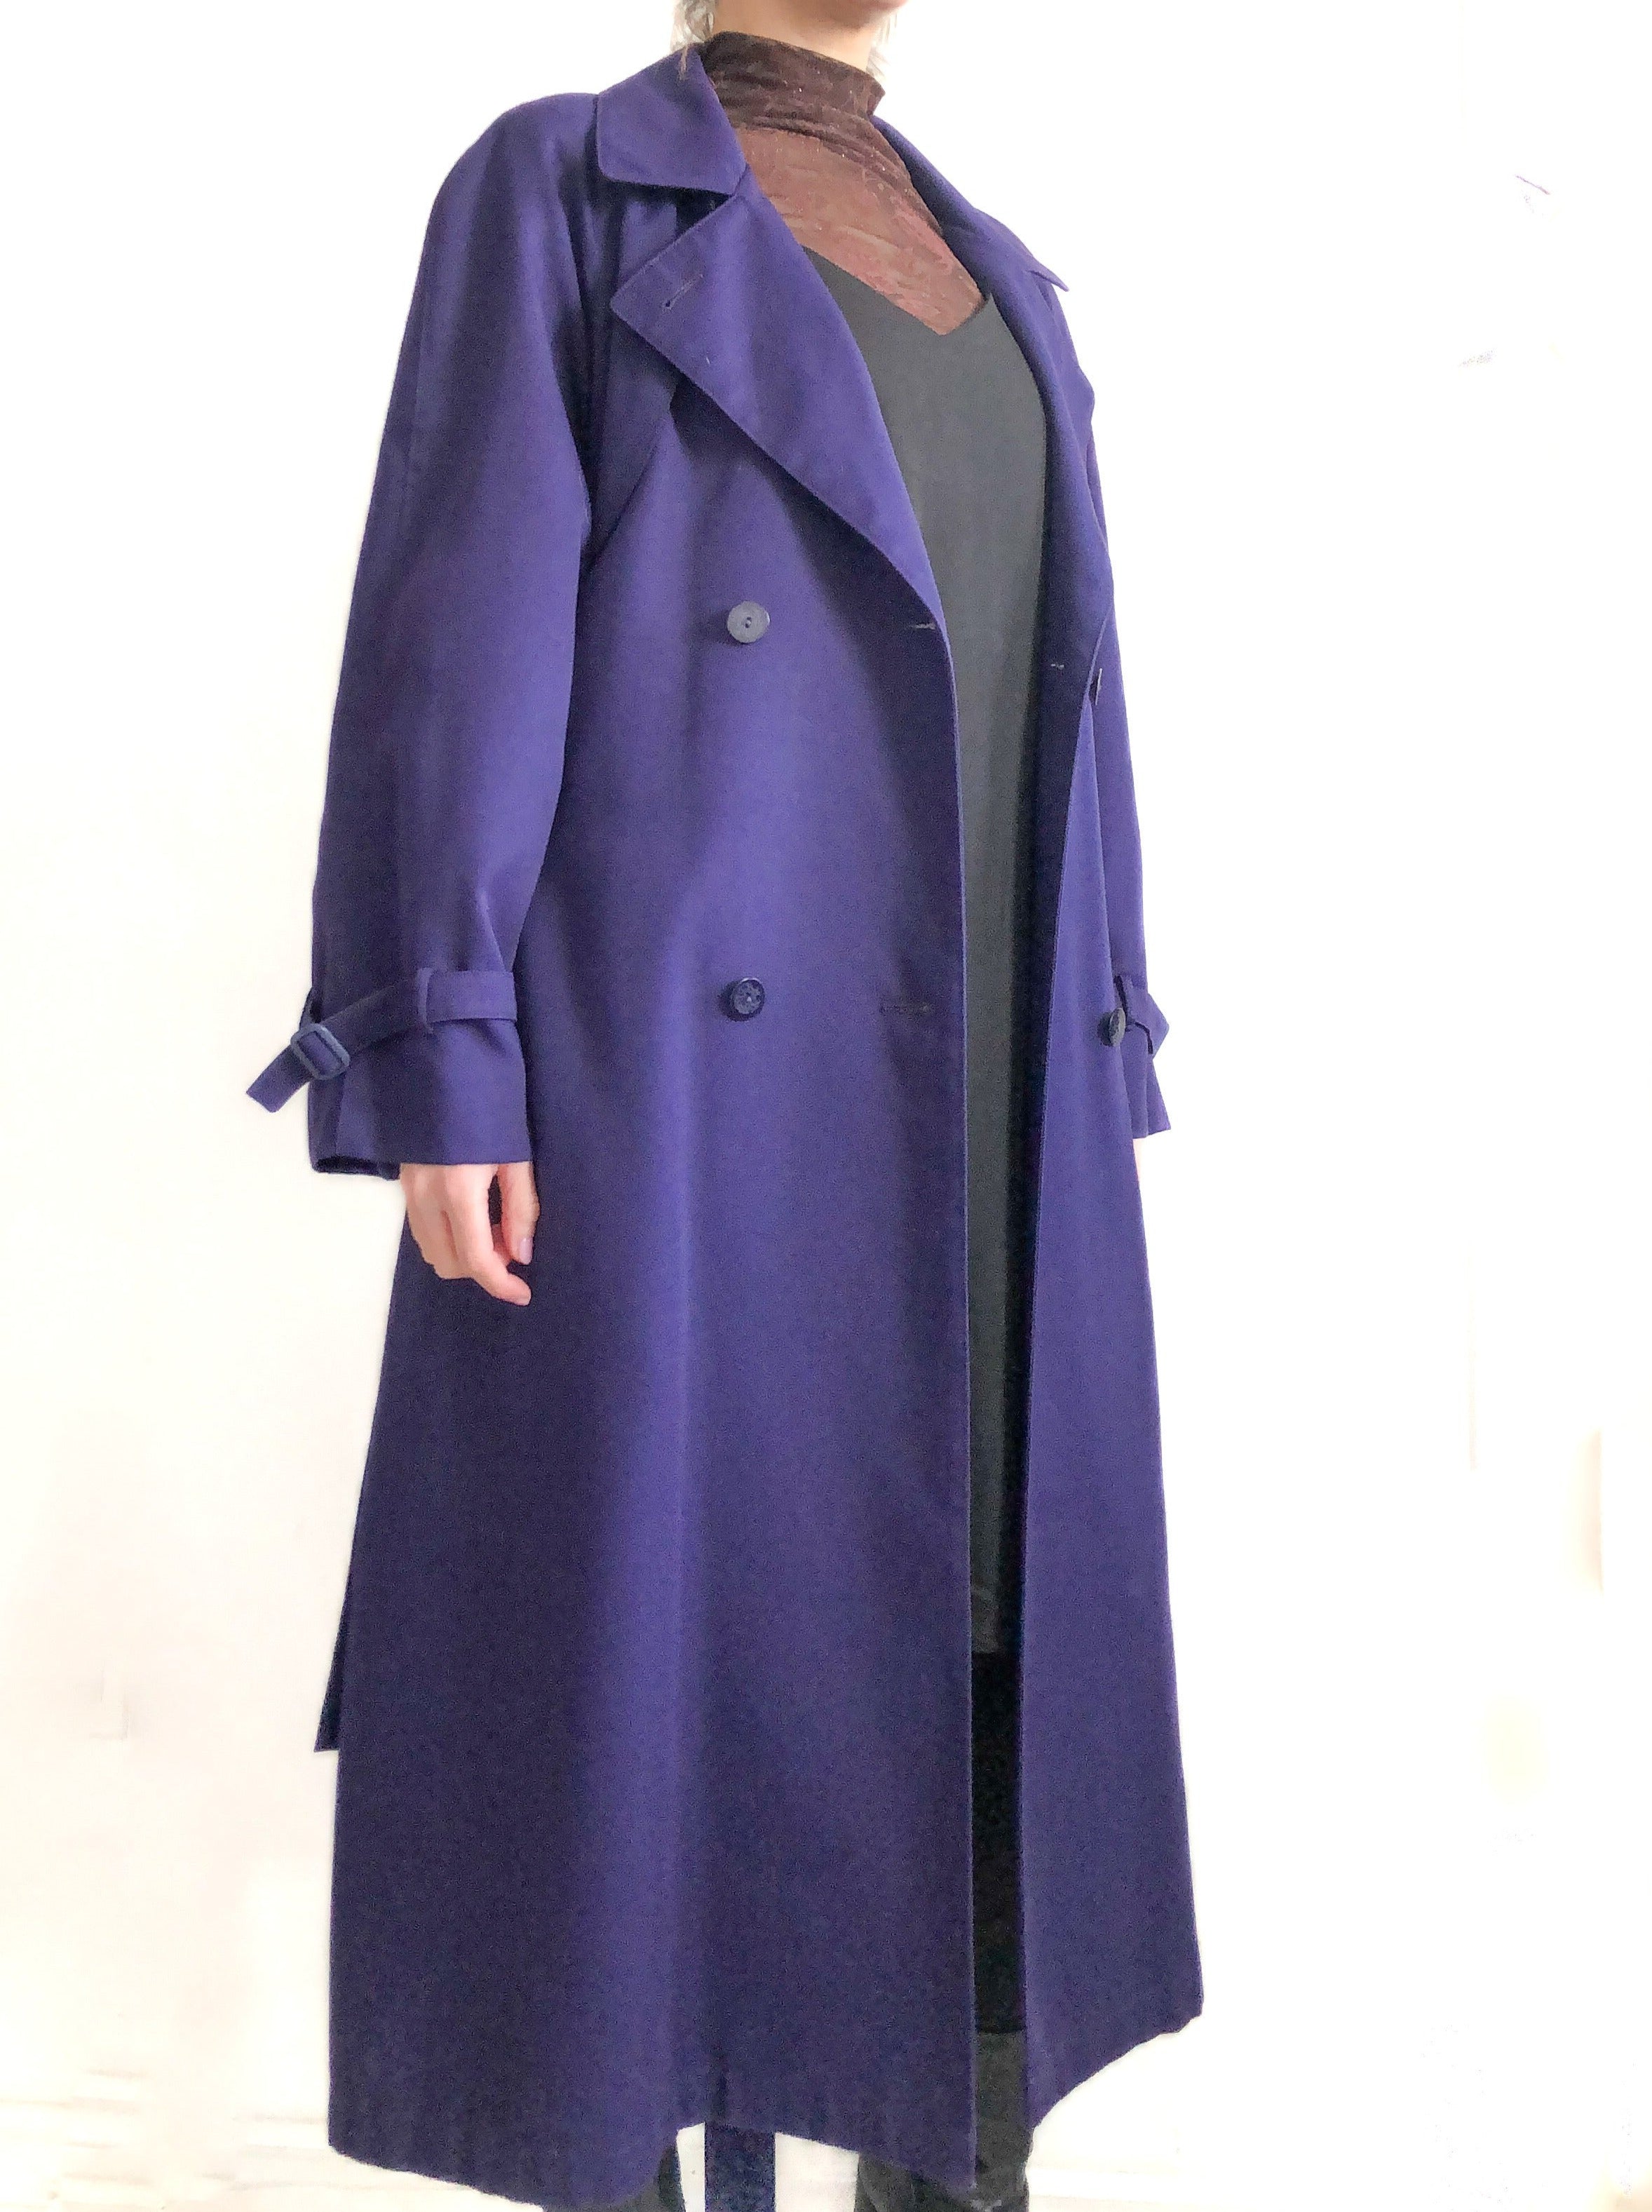 London Fog Trench Coat, Womens Small Purple Vintage Trench Coat, Jewel Tone Long Coat